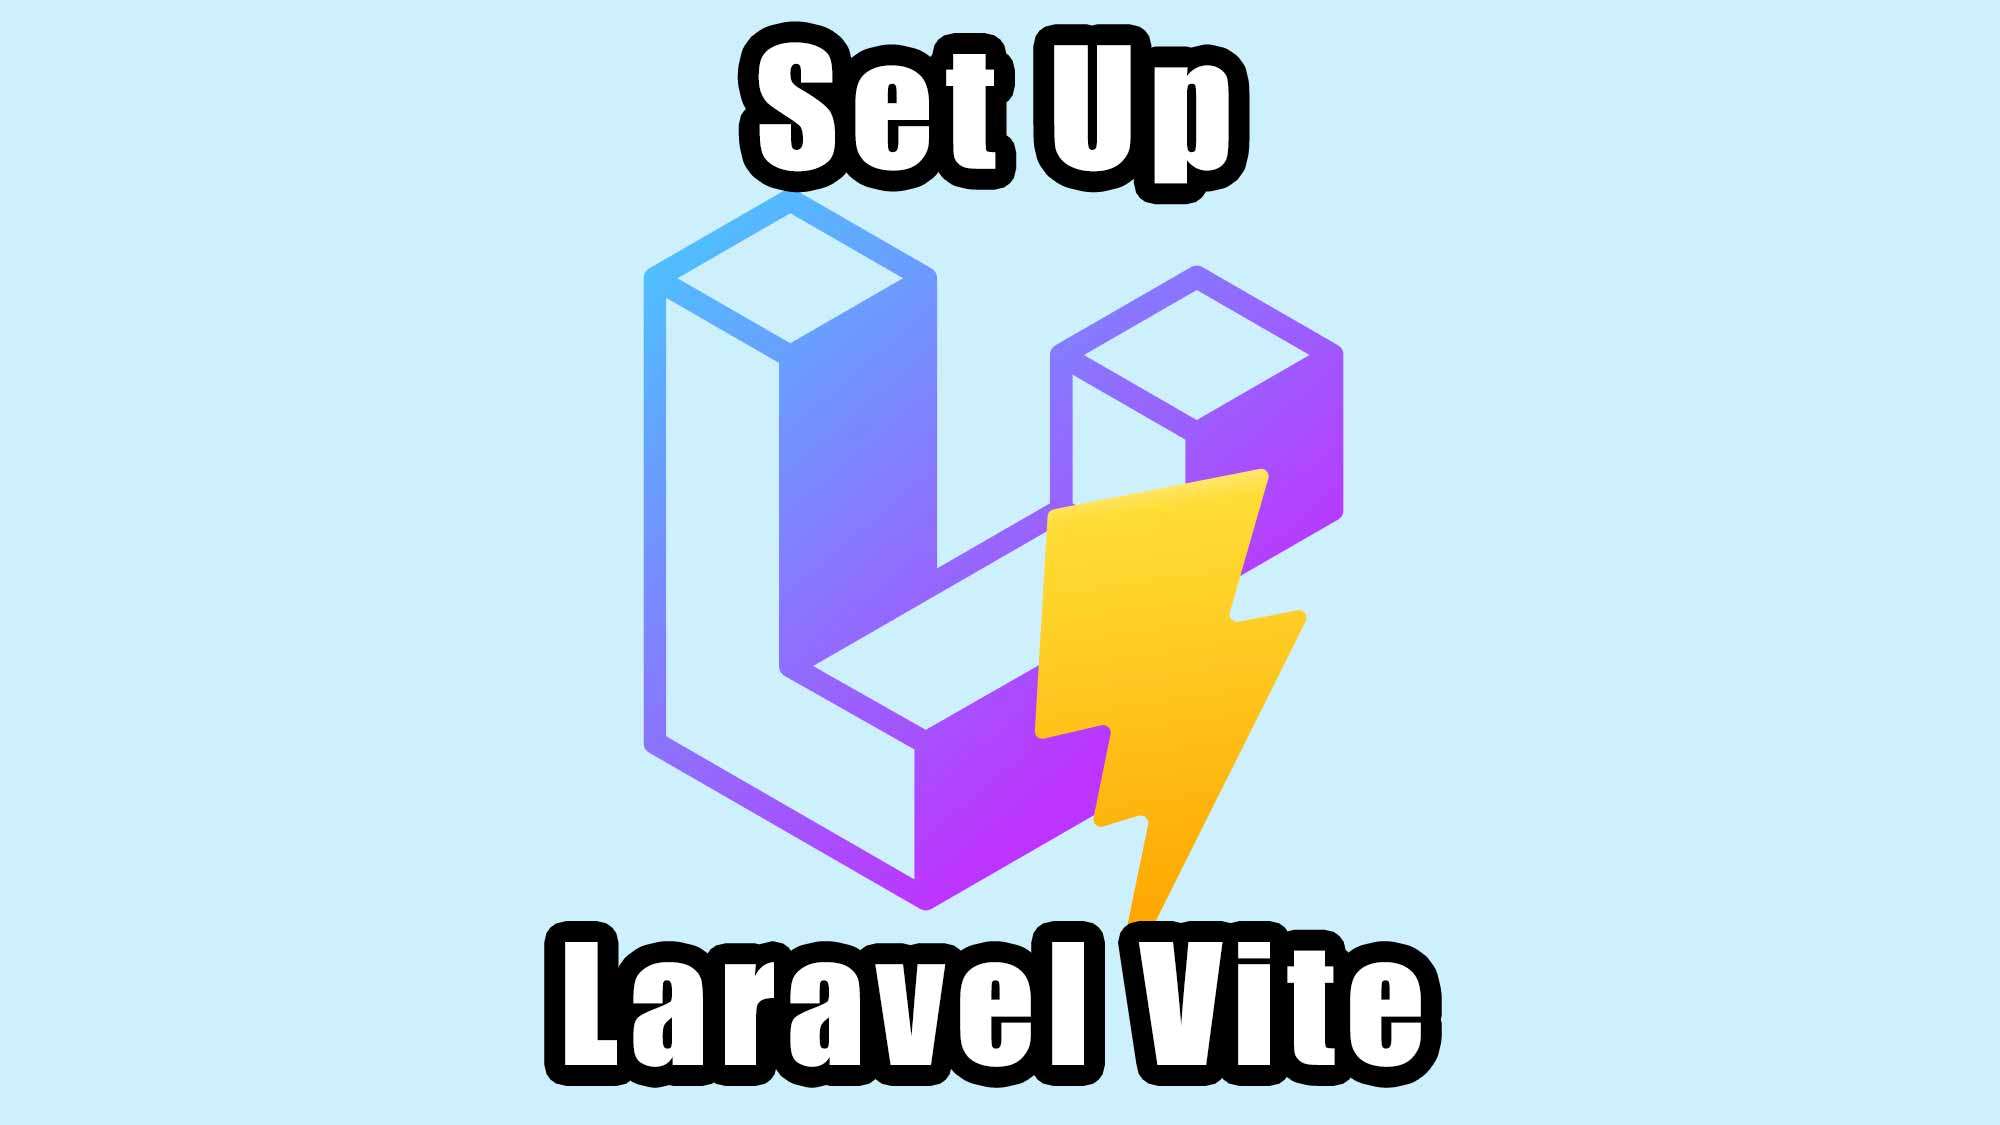 【Laravel Vite】簡単なセットアップ方法とエラーの対処法